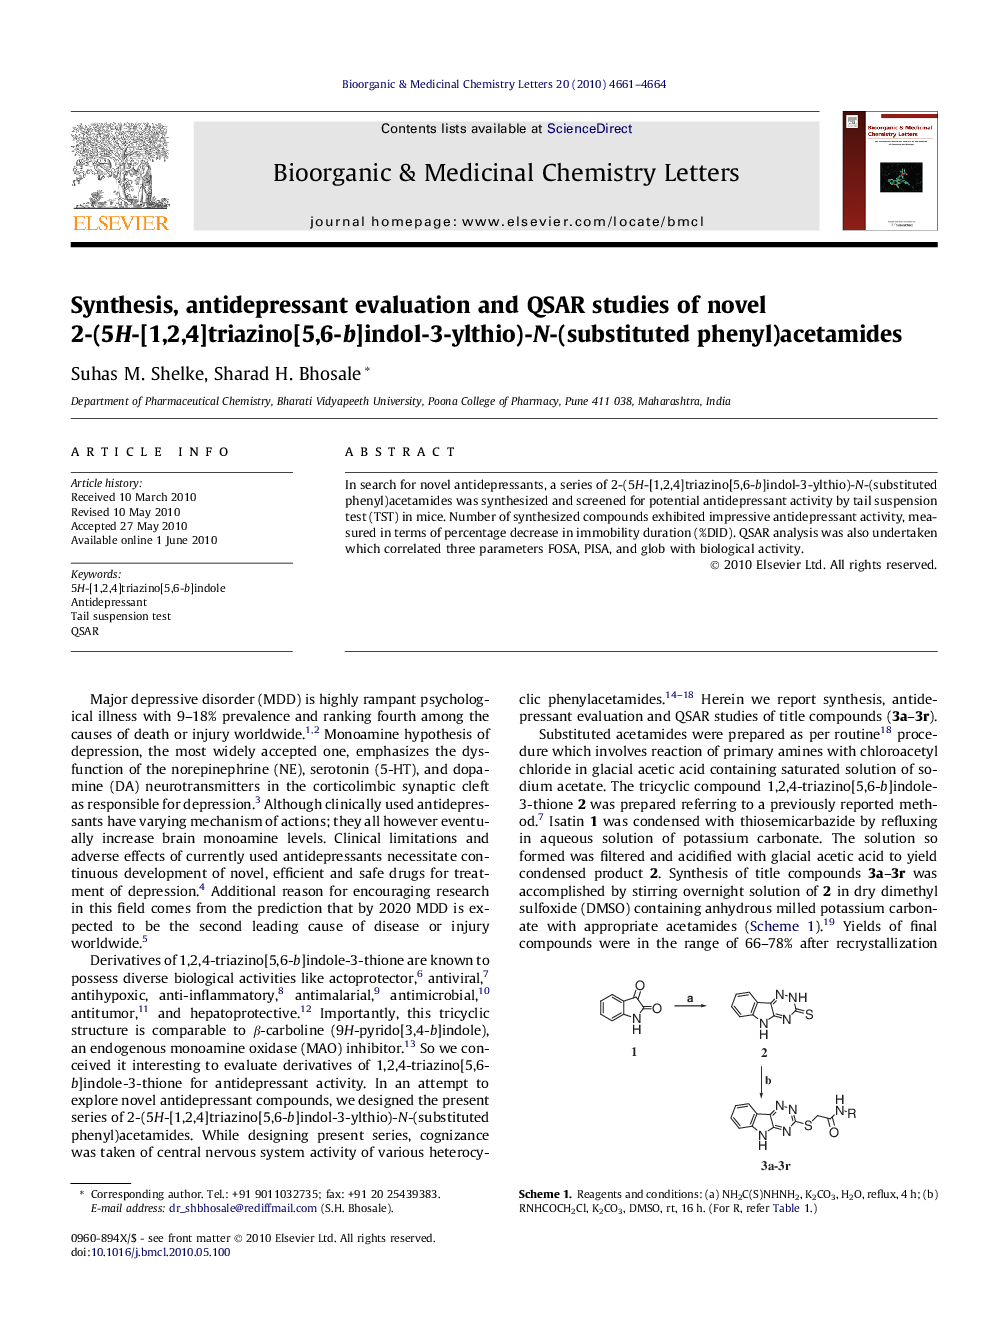 Synthesis, antidepressant evaluation and QSAR studies of novel 2-(5H-[1,2,4]triazino[5,6-b]indol-3-ylthio)-N-(substituted phenyl)acetamides